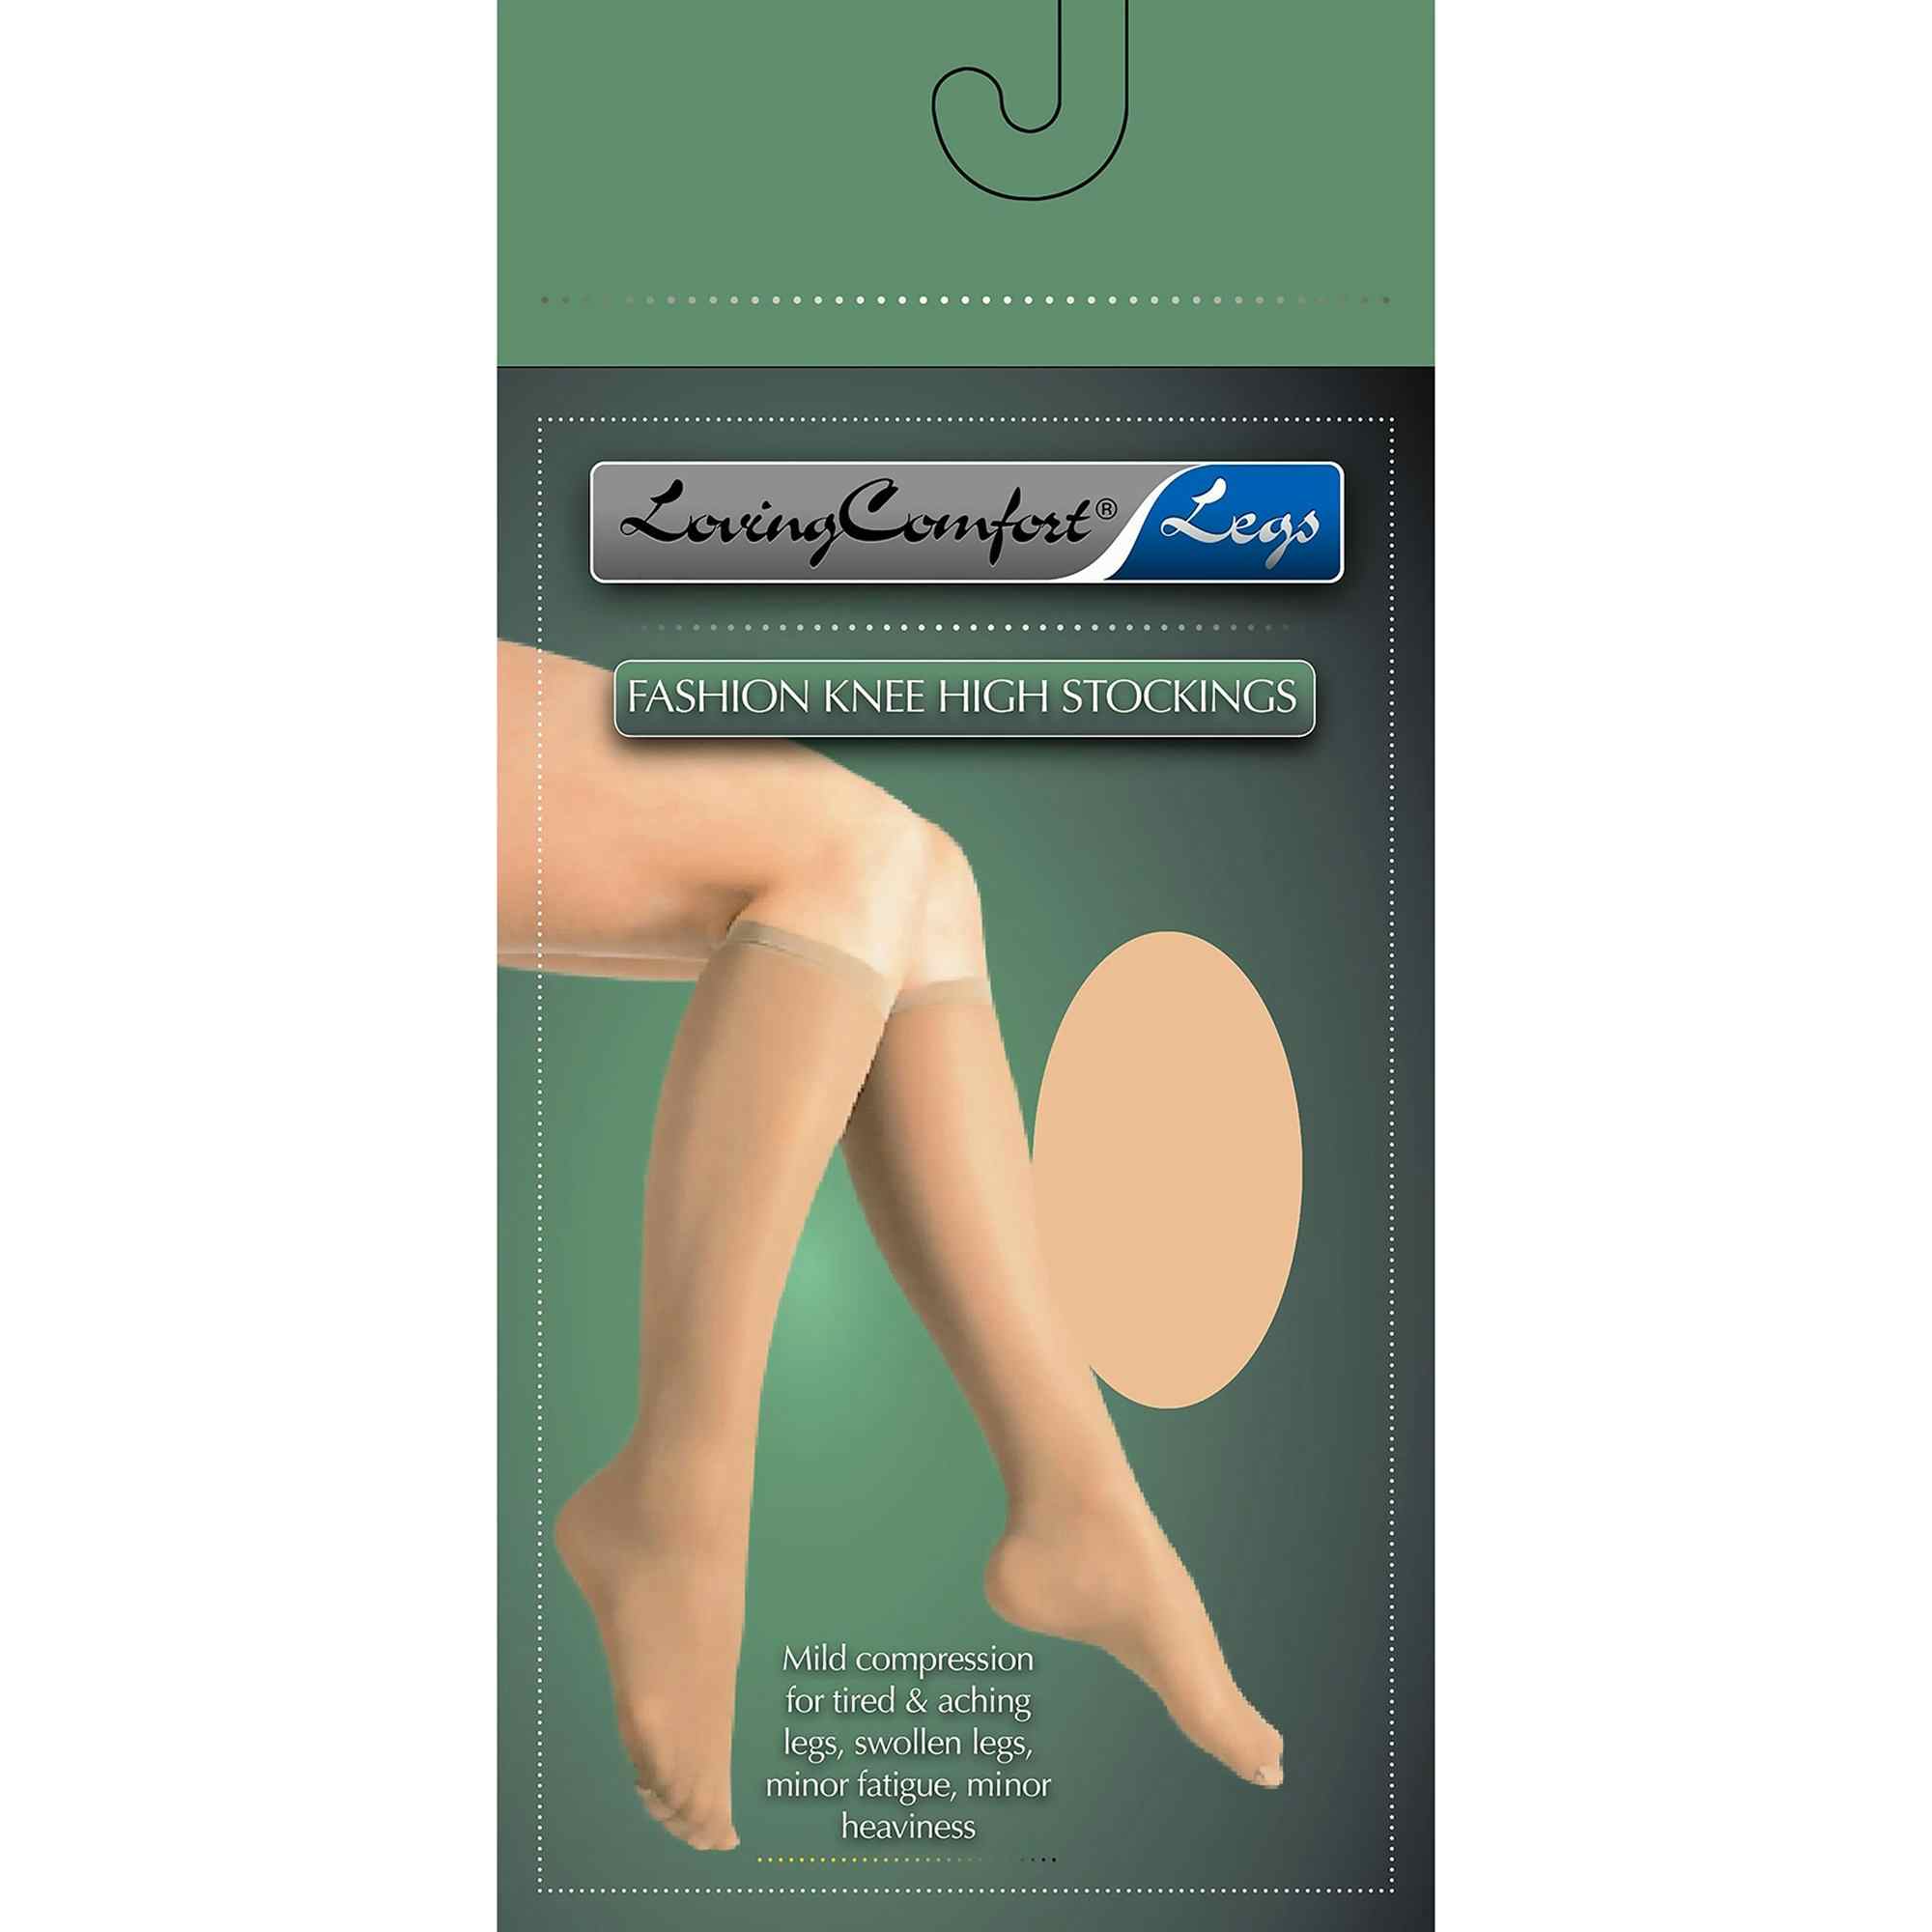 Loving Comfort Legs Fashion Knee High Stockings , 1648 BEI LG, Beige - Large - 2 Pairs